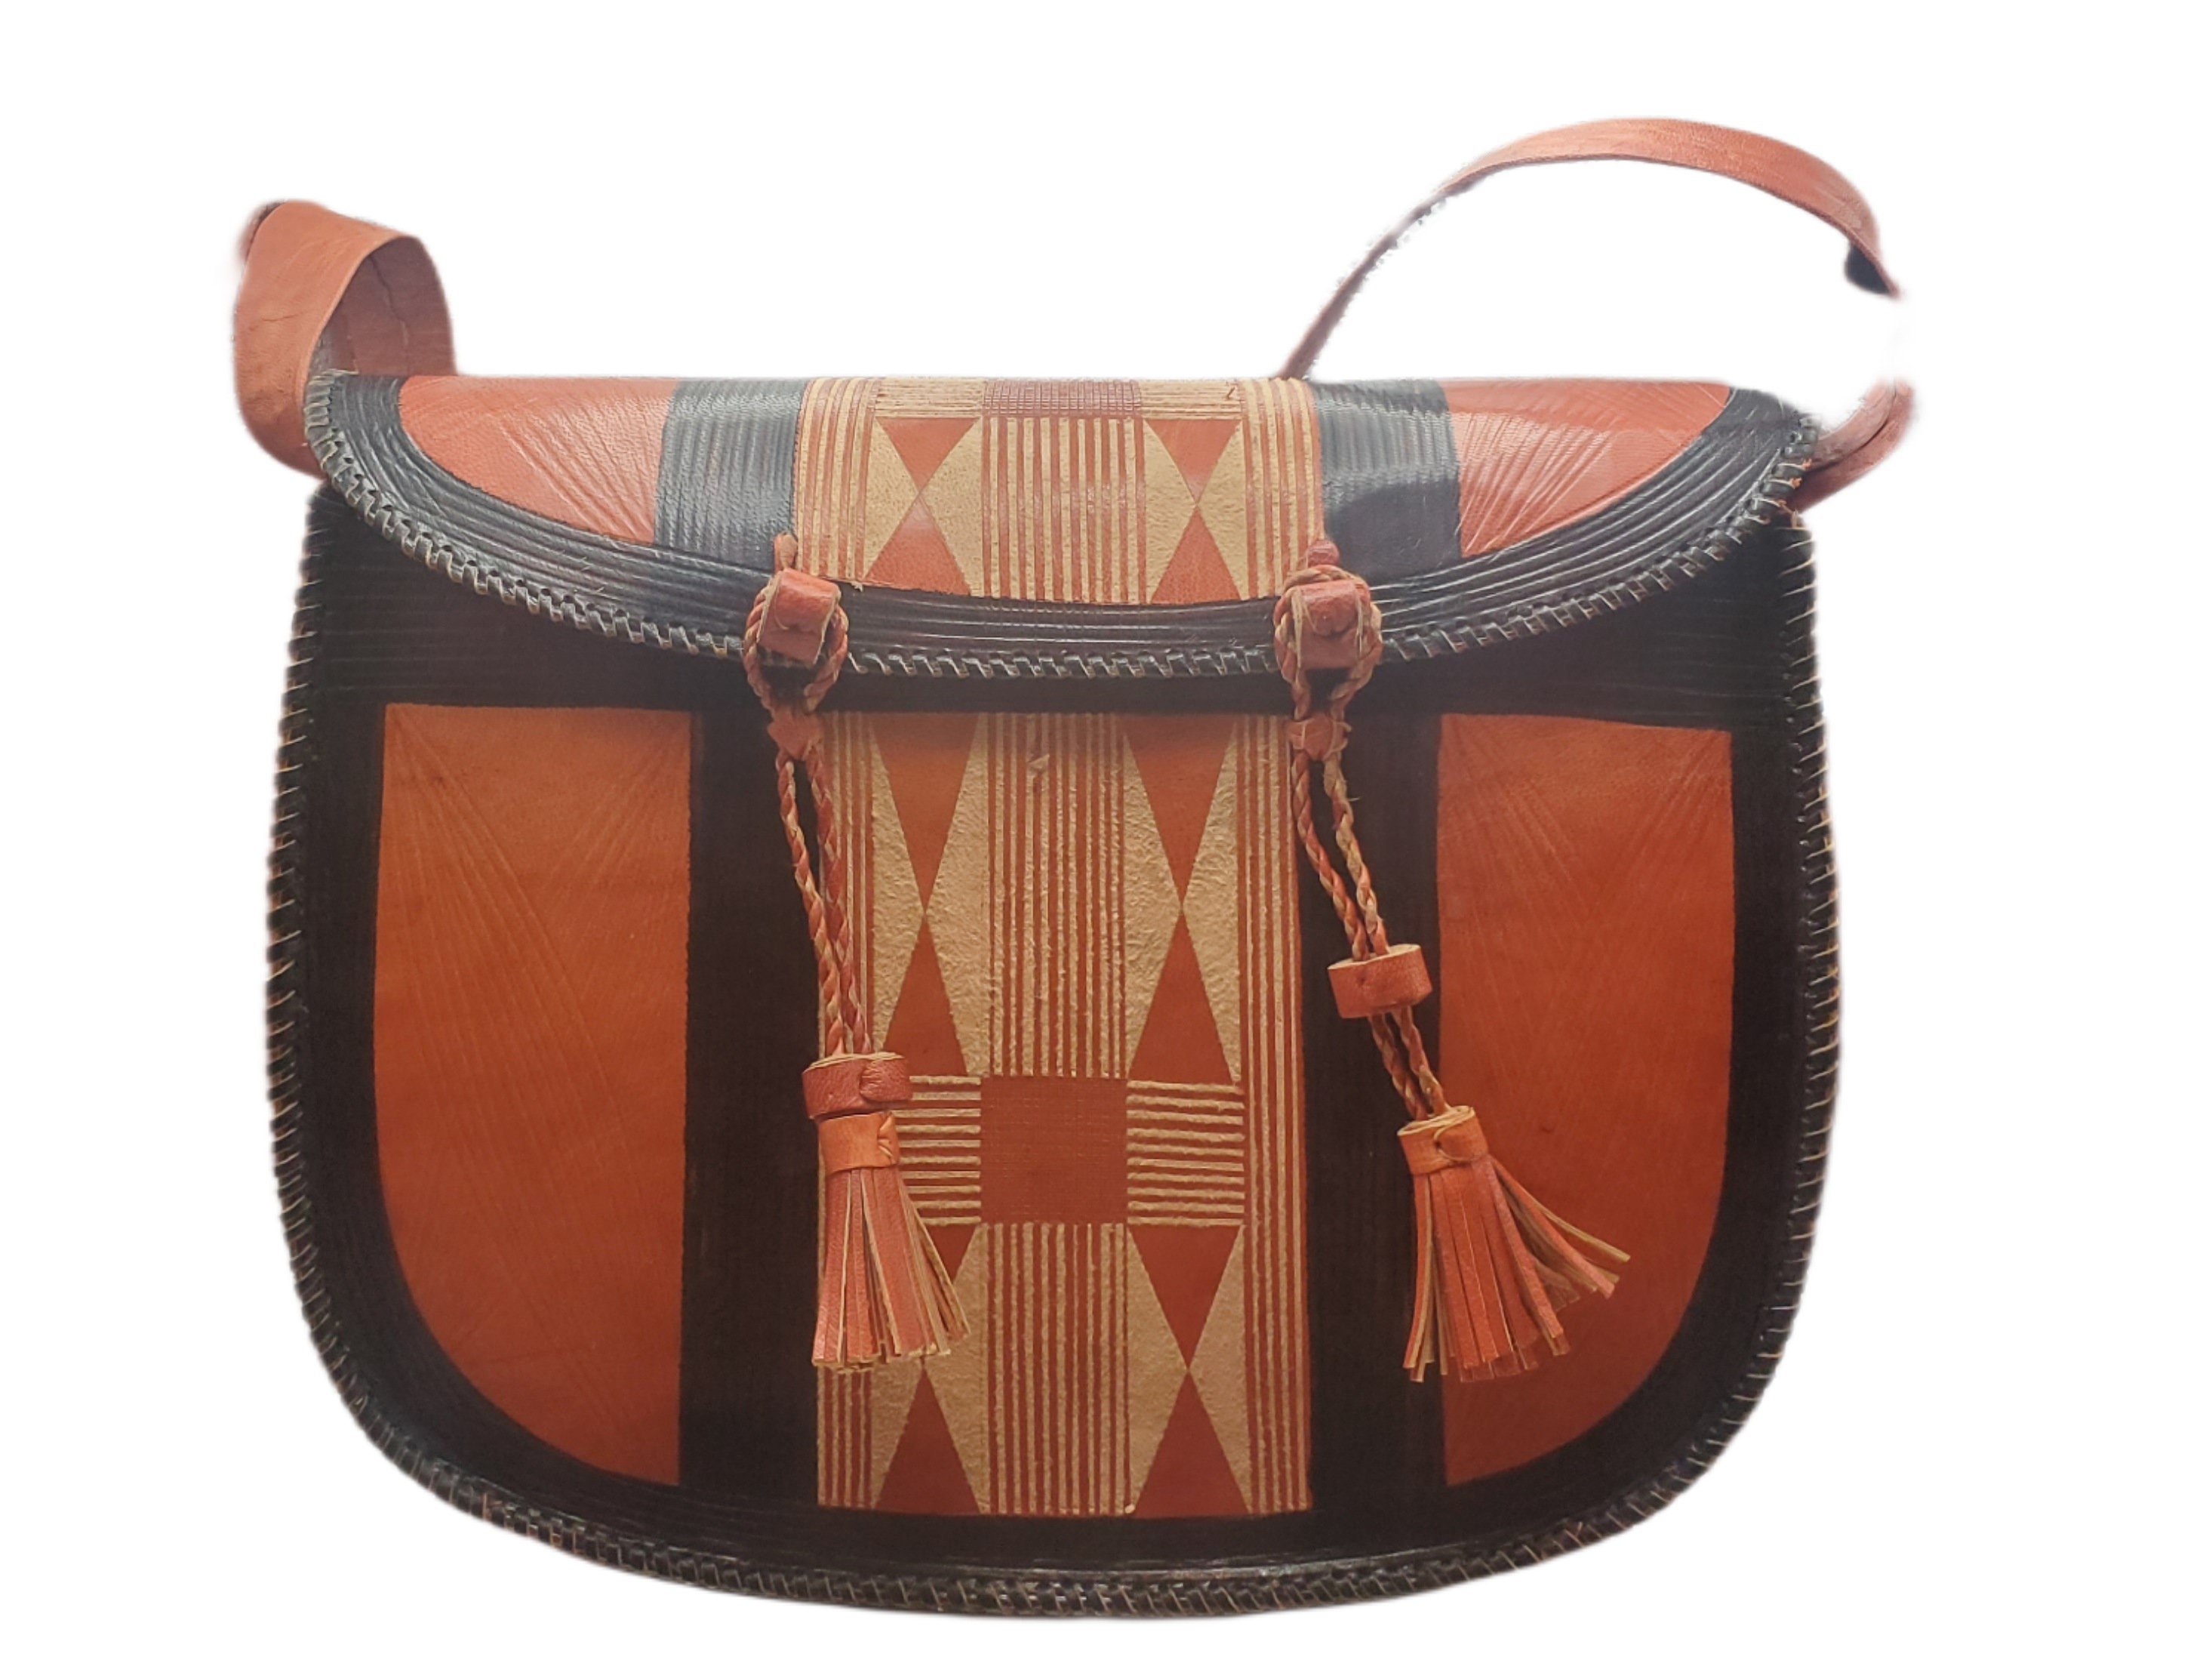 Kinganc Purse Strap Wide Shoulder Straps, Adjustable Crossbody Bag Strap,  Replacement Straps for Women Handbags Canvas(African vioet)